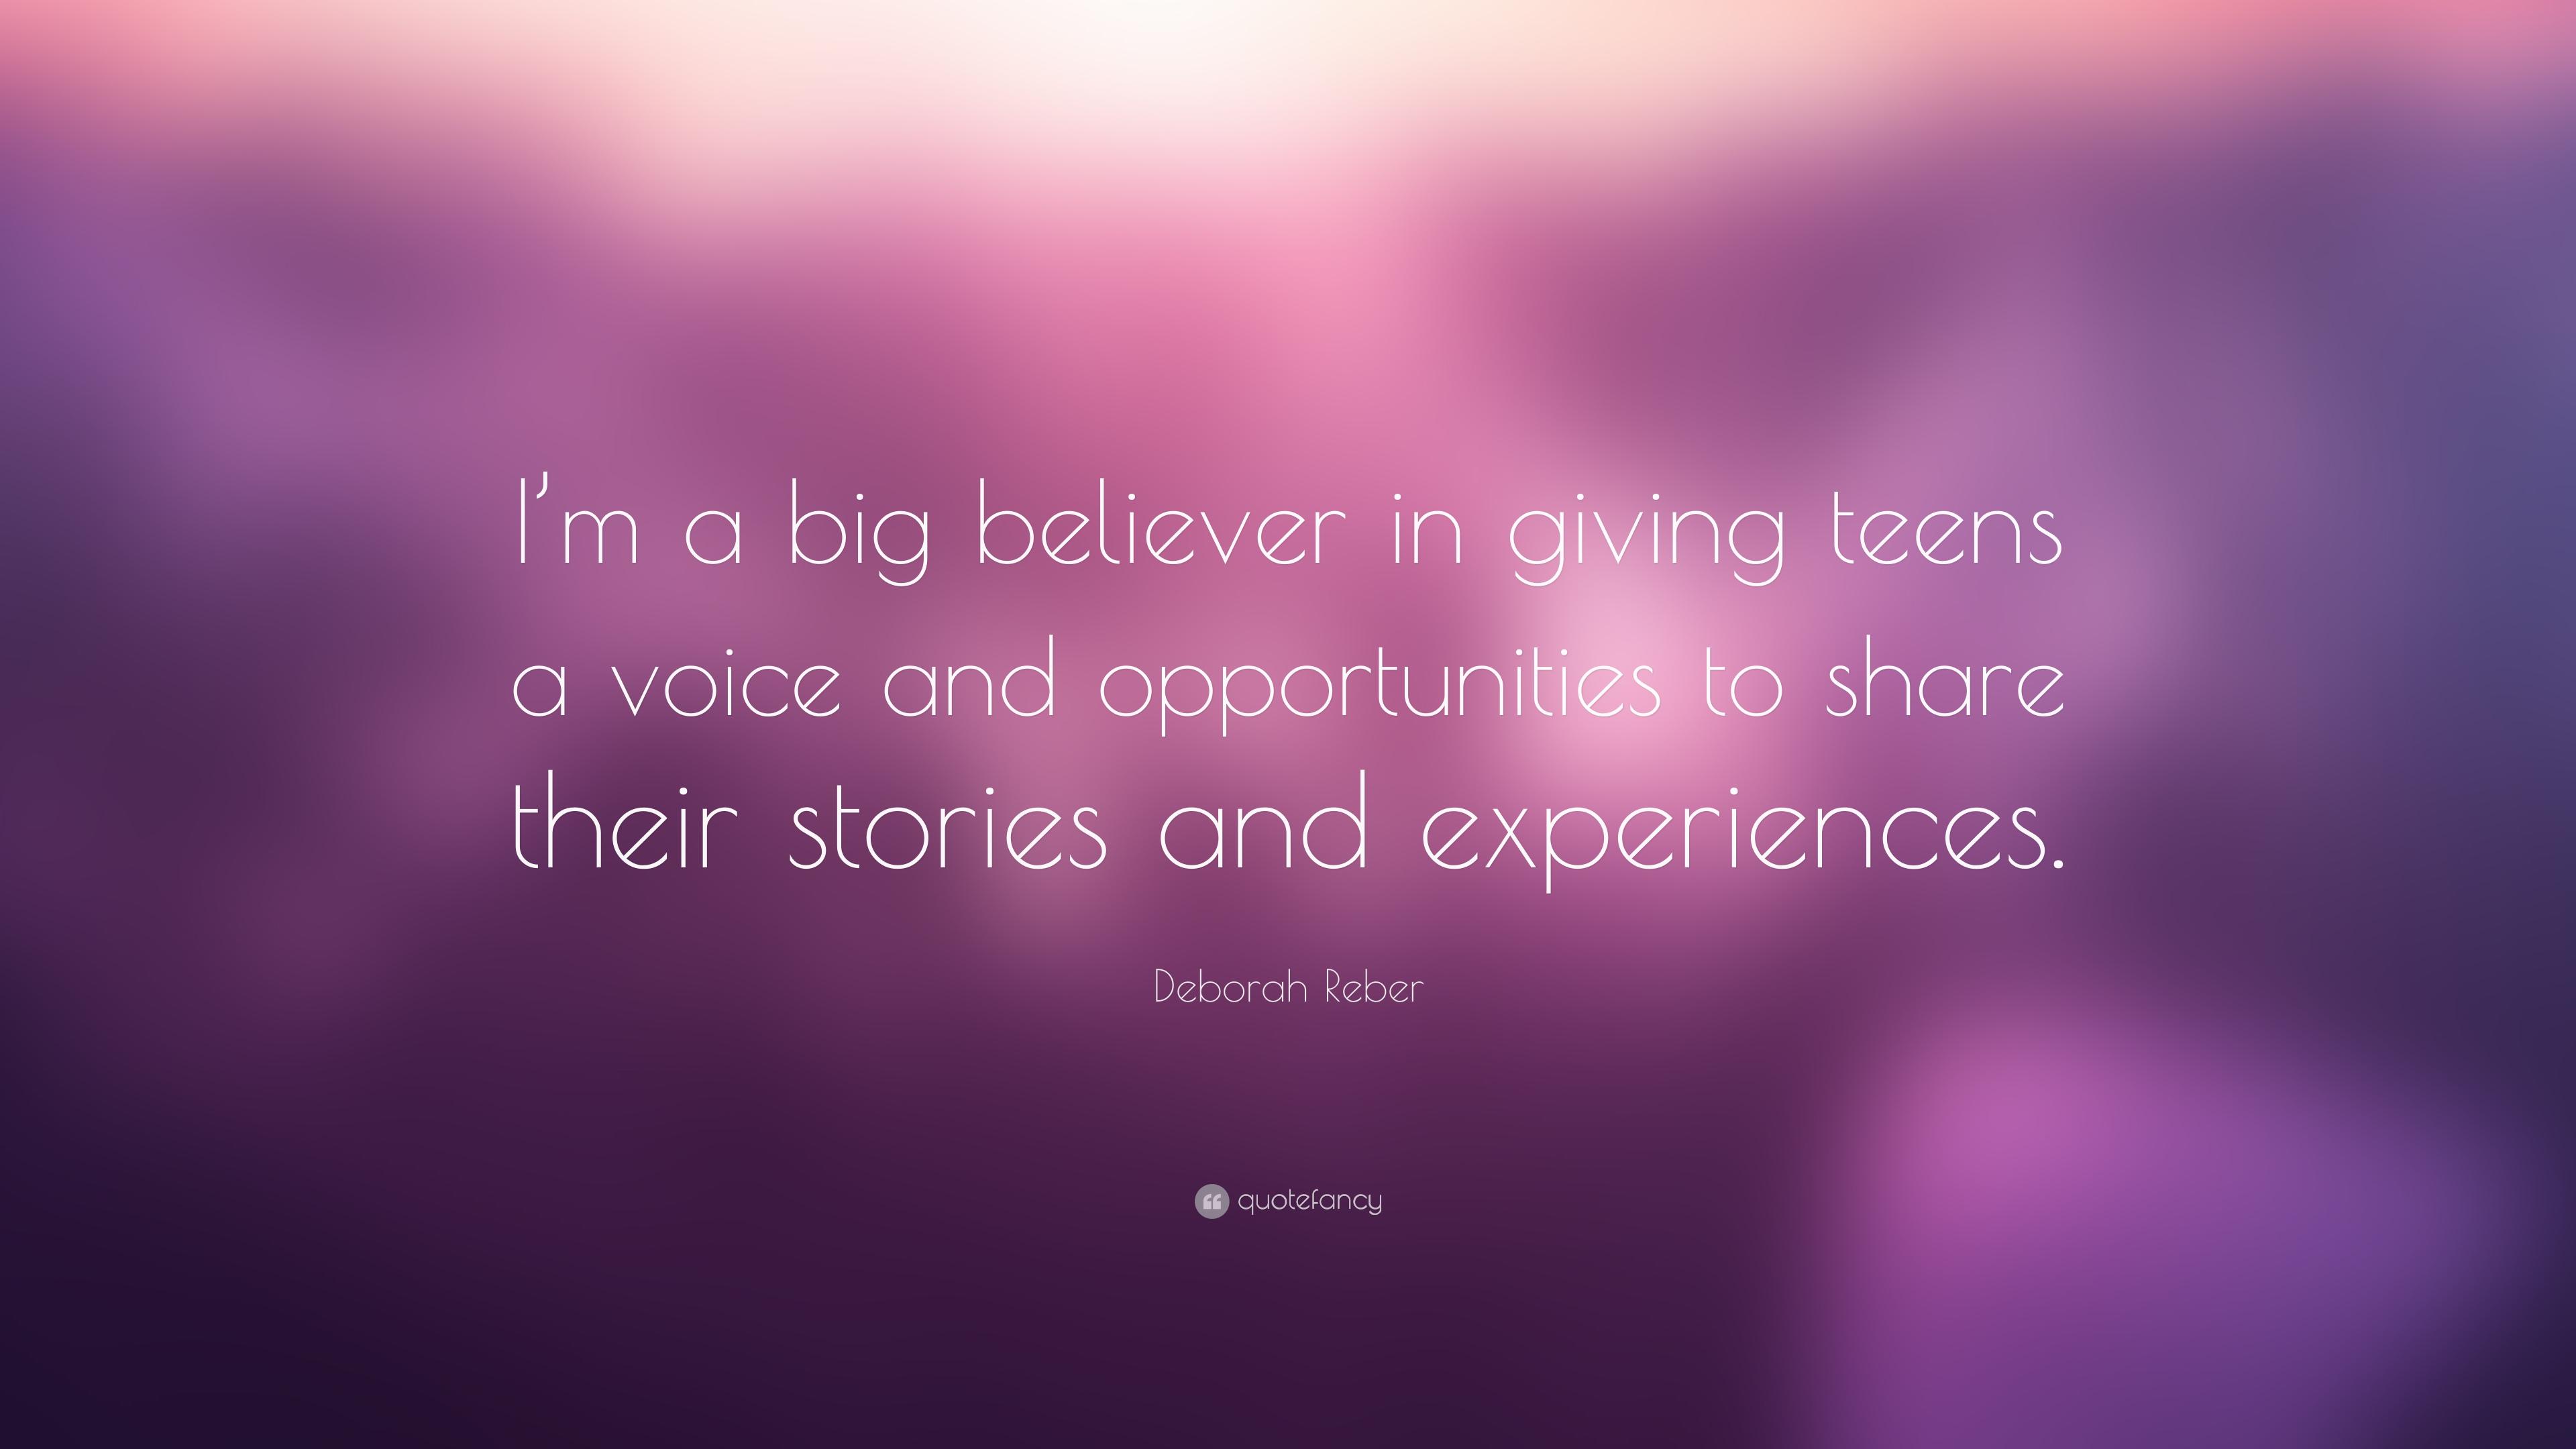 Deborah Reber Quote: “I'm a big believer in giving teens a voice